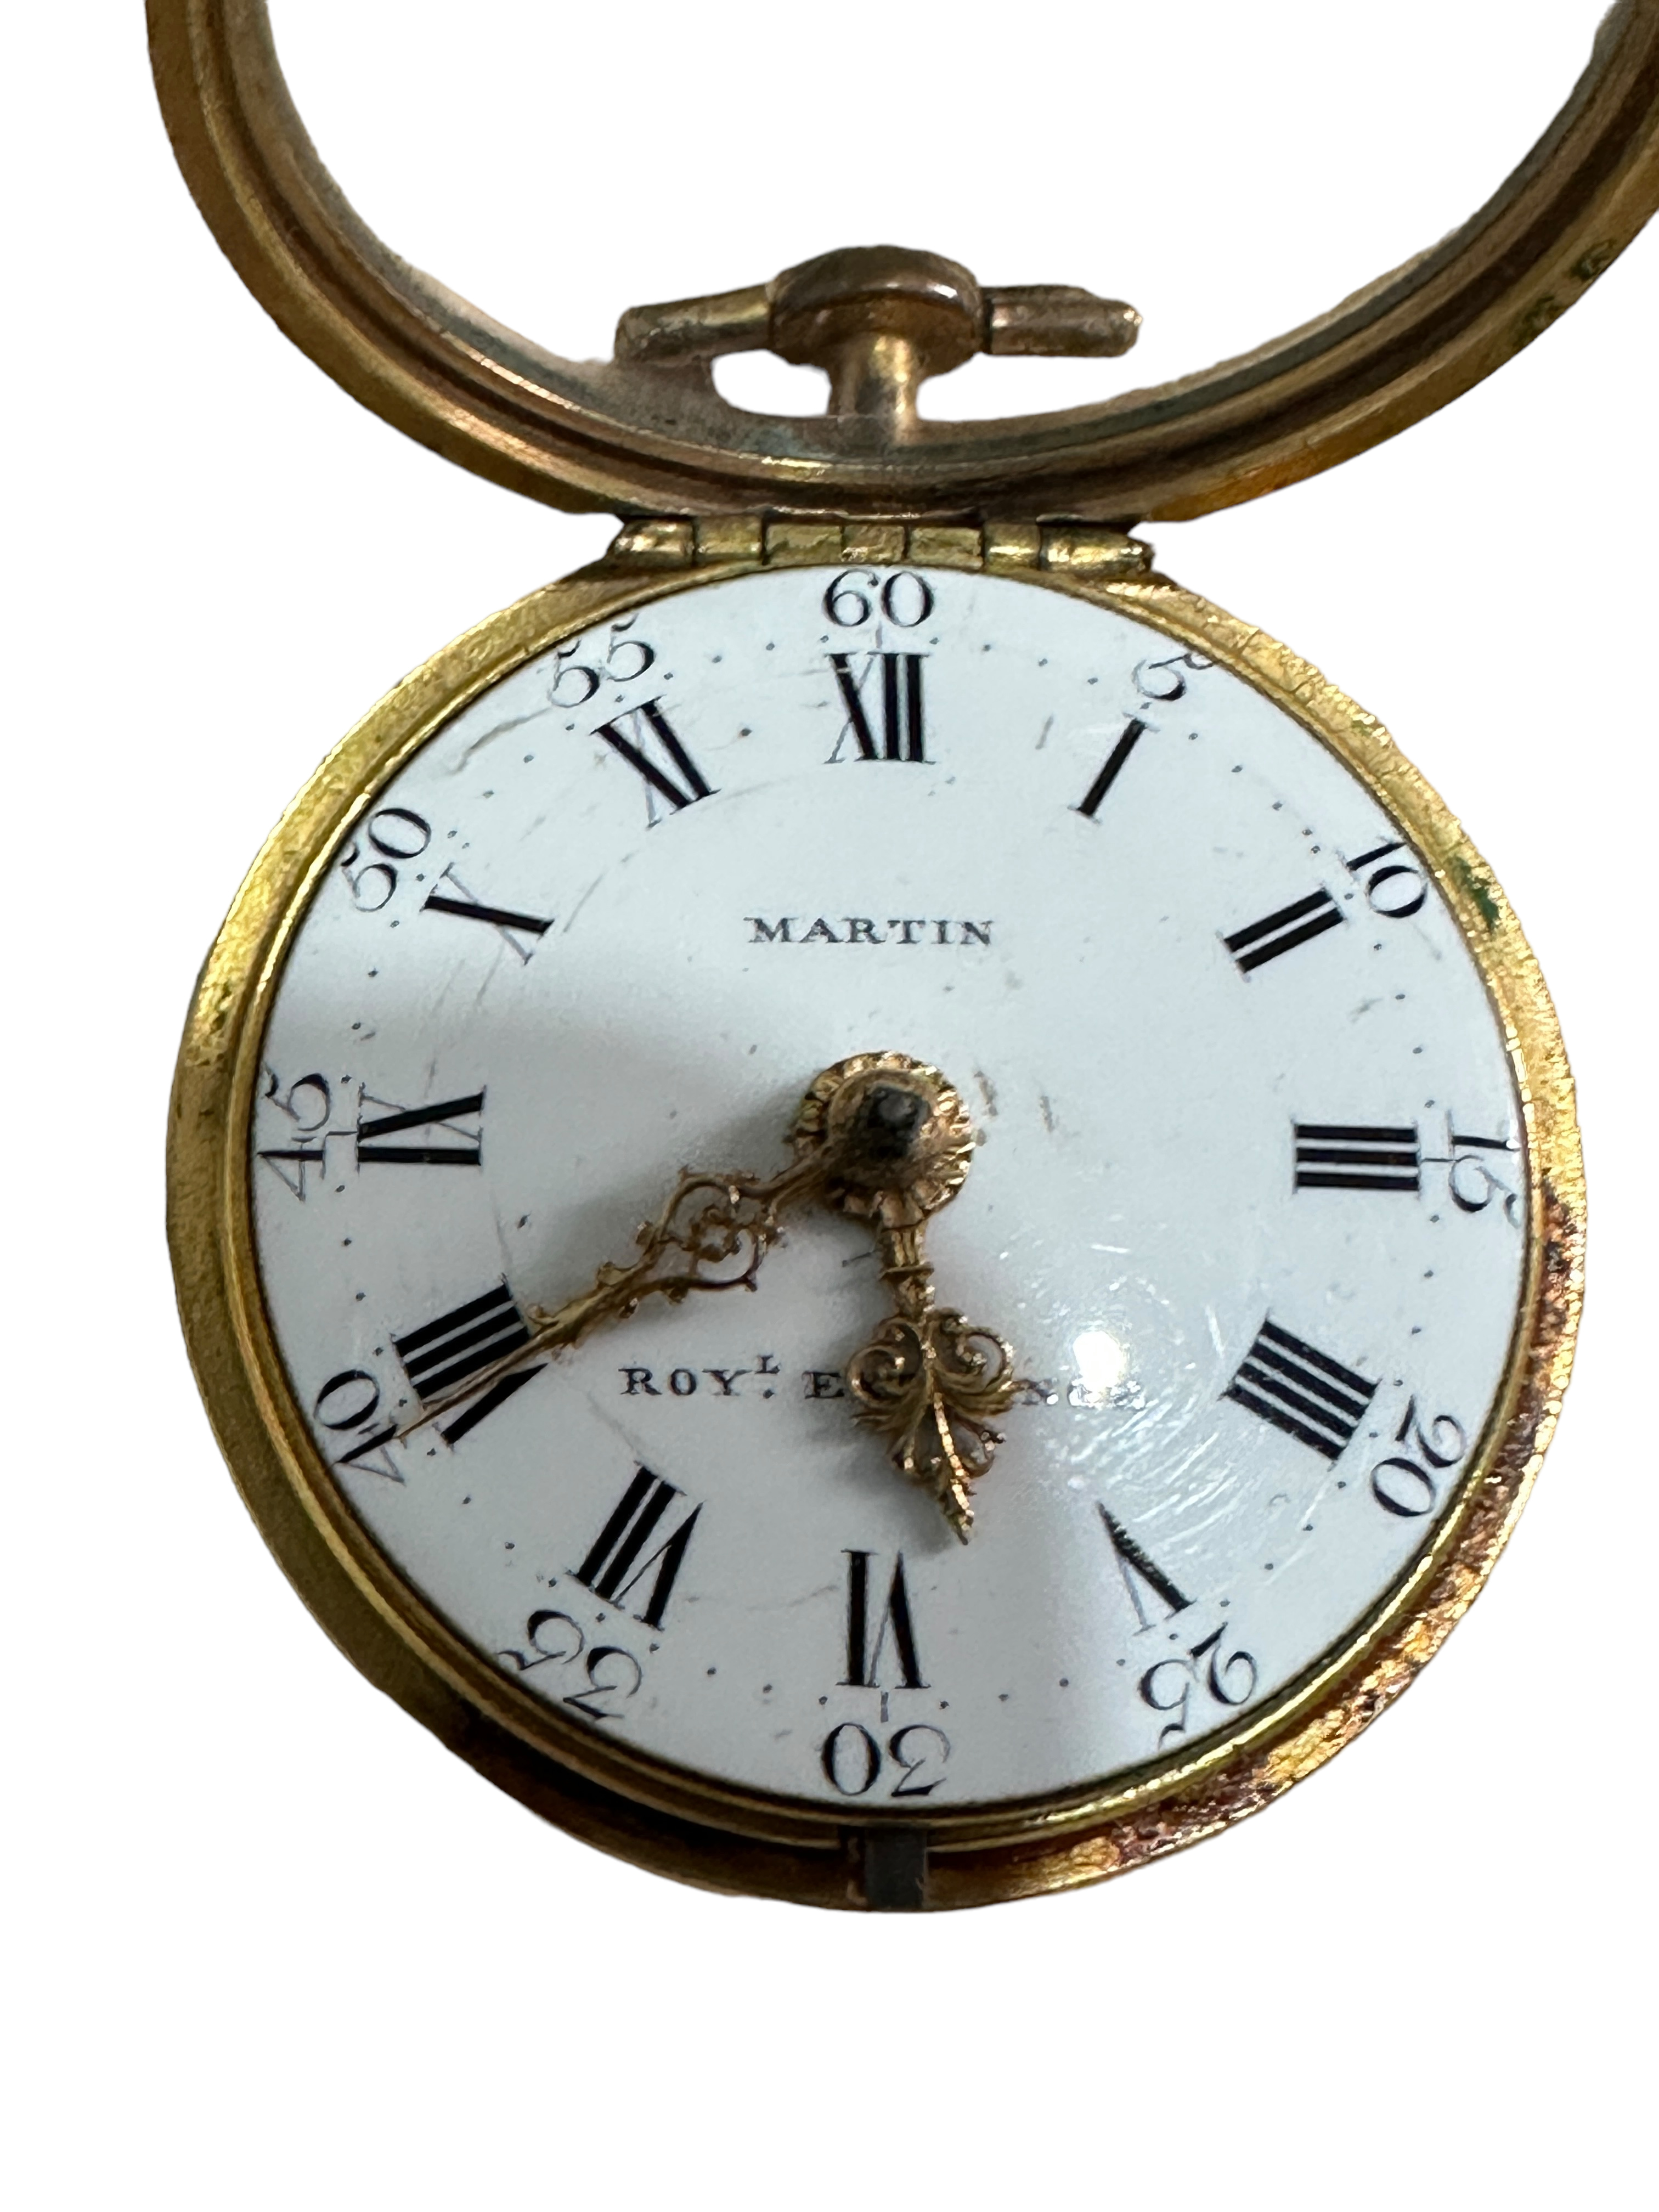 Antique Martin Royal Exchange London Verge Pocket Watch - Gold Case? - working order. - Image 8 of 16